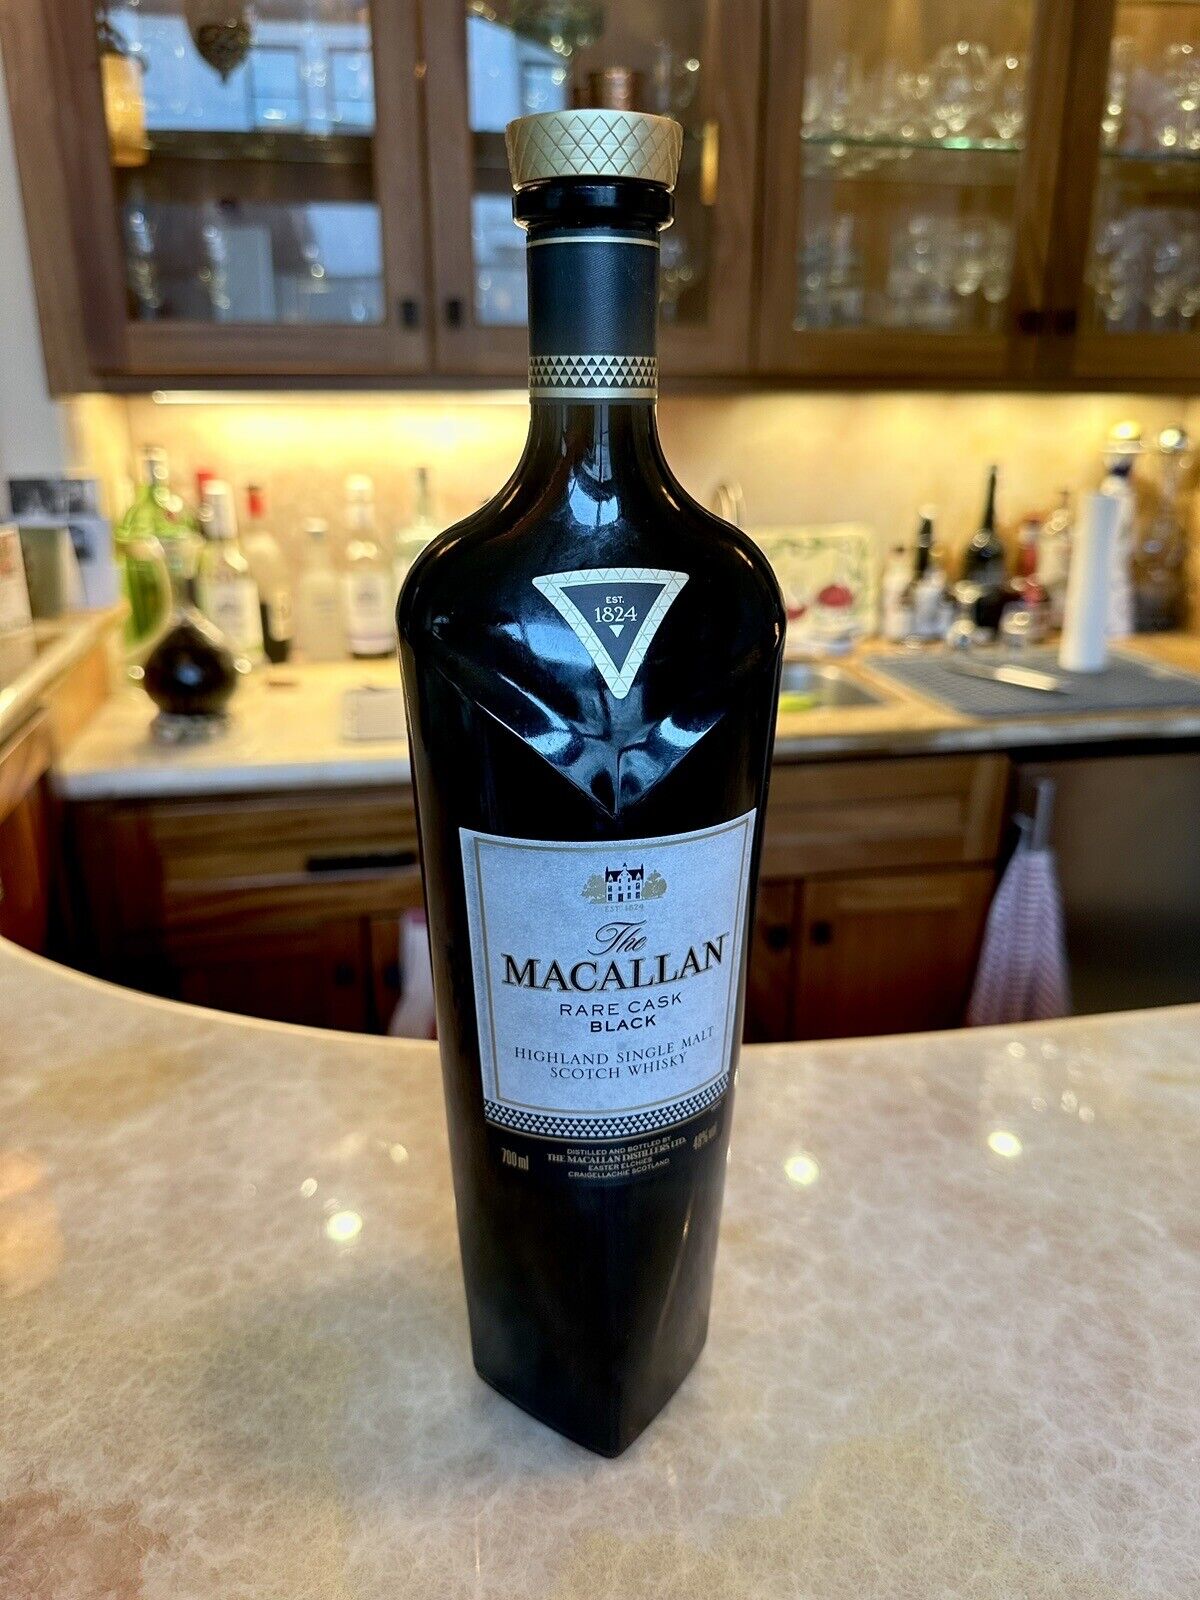 The Macallan Rare Cask Black Scotch Whisky Empty Bottle.